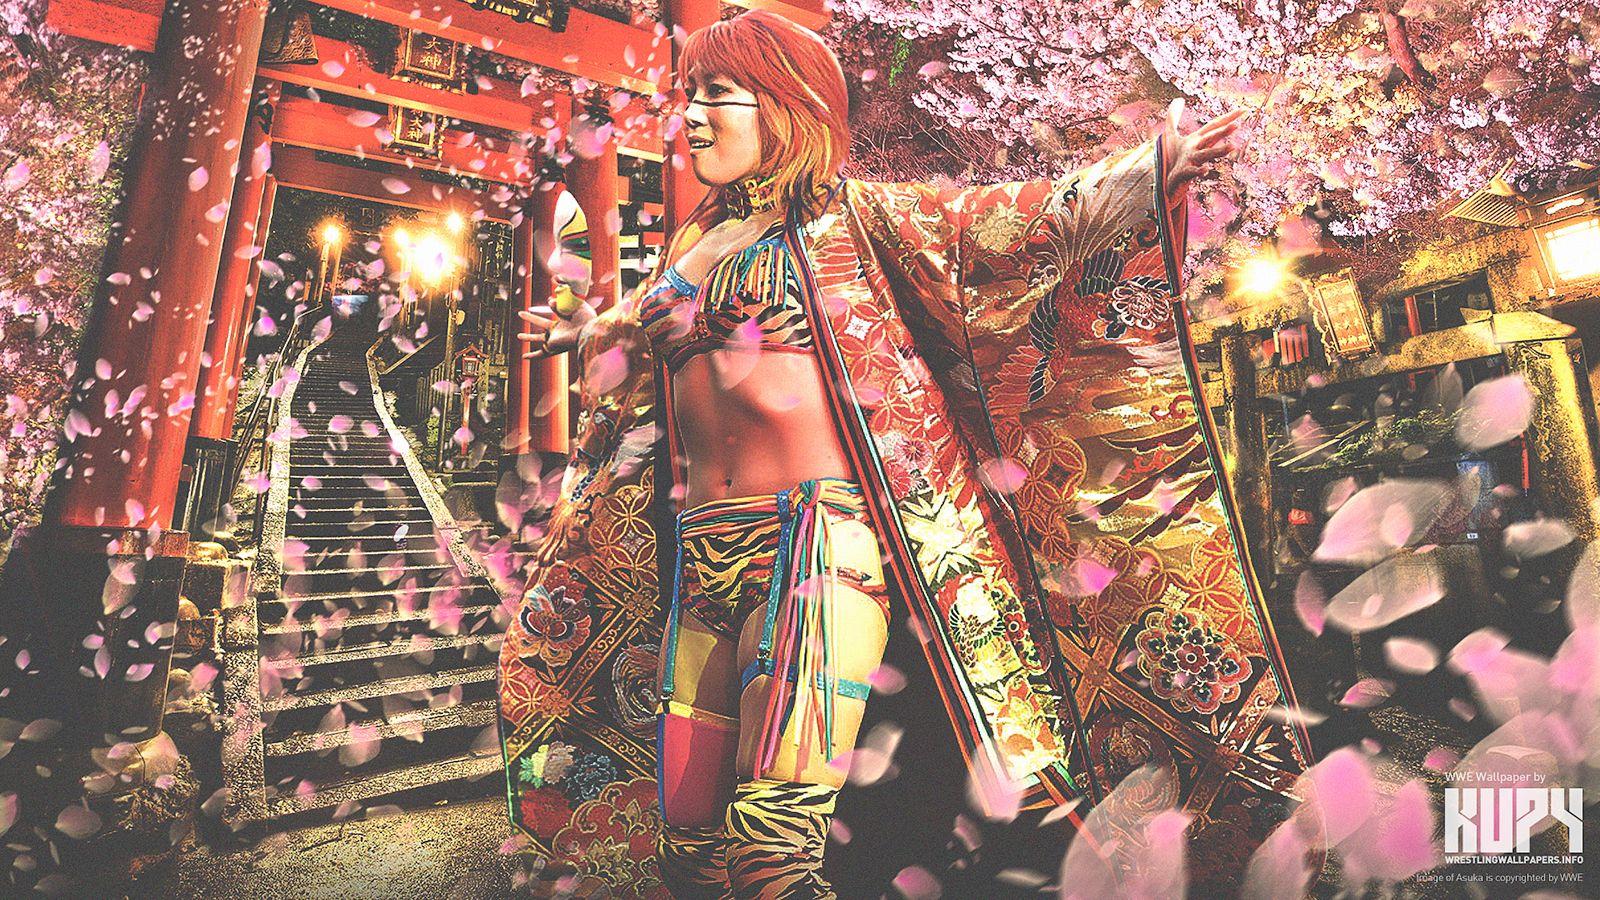 WWE image Asuka HD wallpaper and background photo